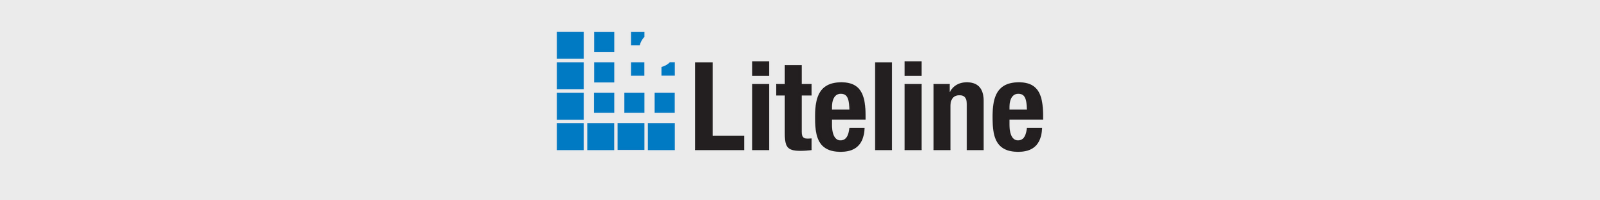 logo liteline